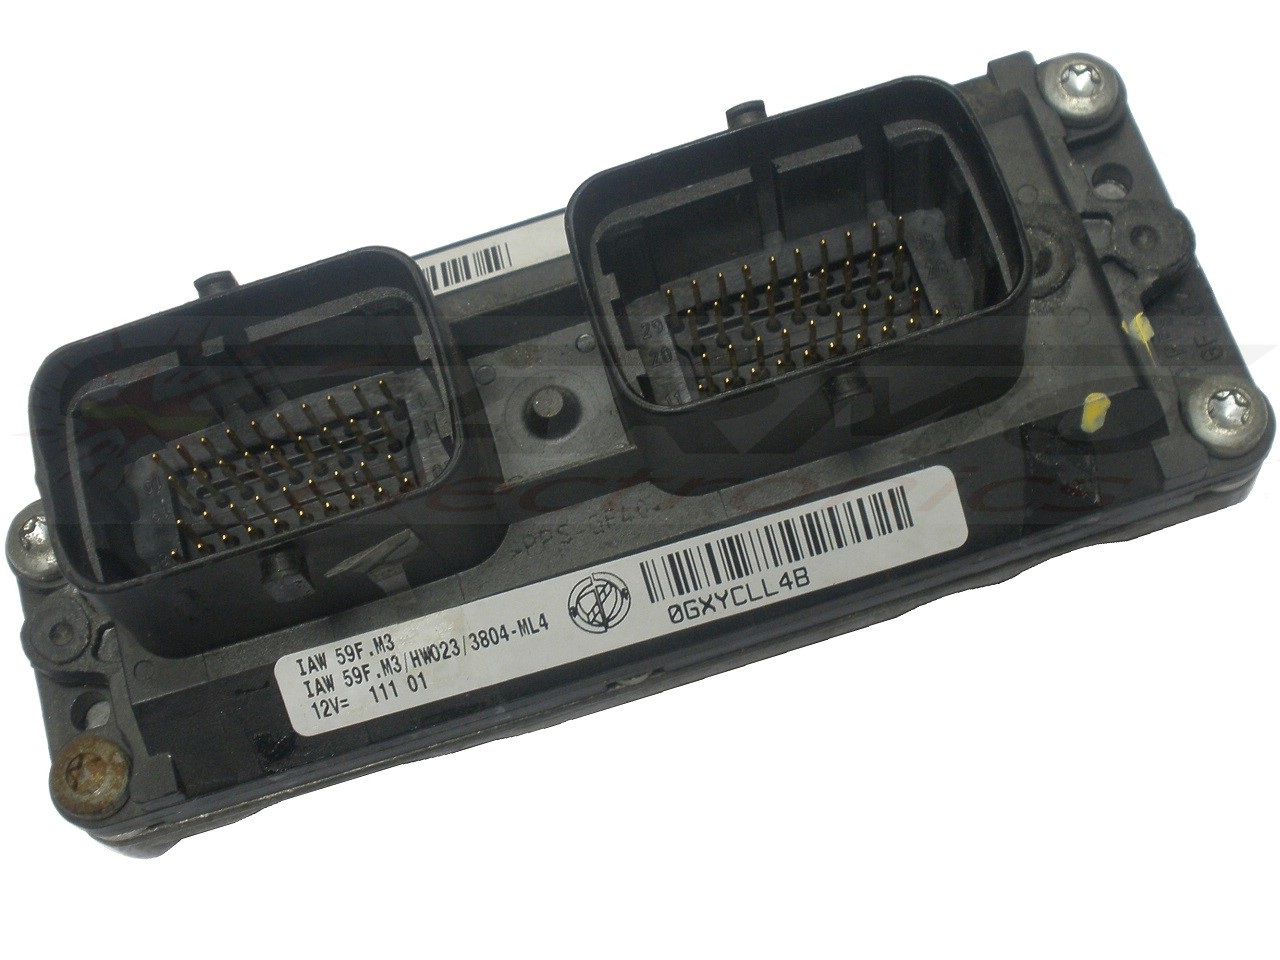 Fiat Doblo ECU ECM CDI black box computer brain (IAW 59F.M3, IAW59F.M3)